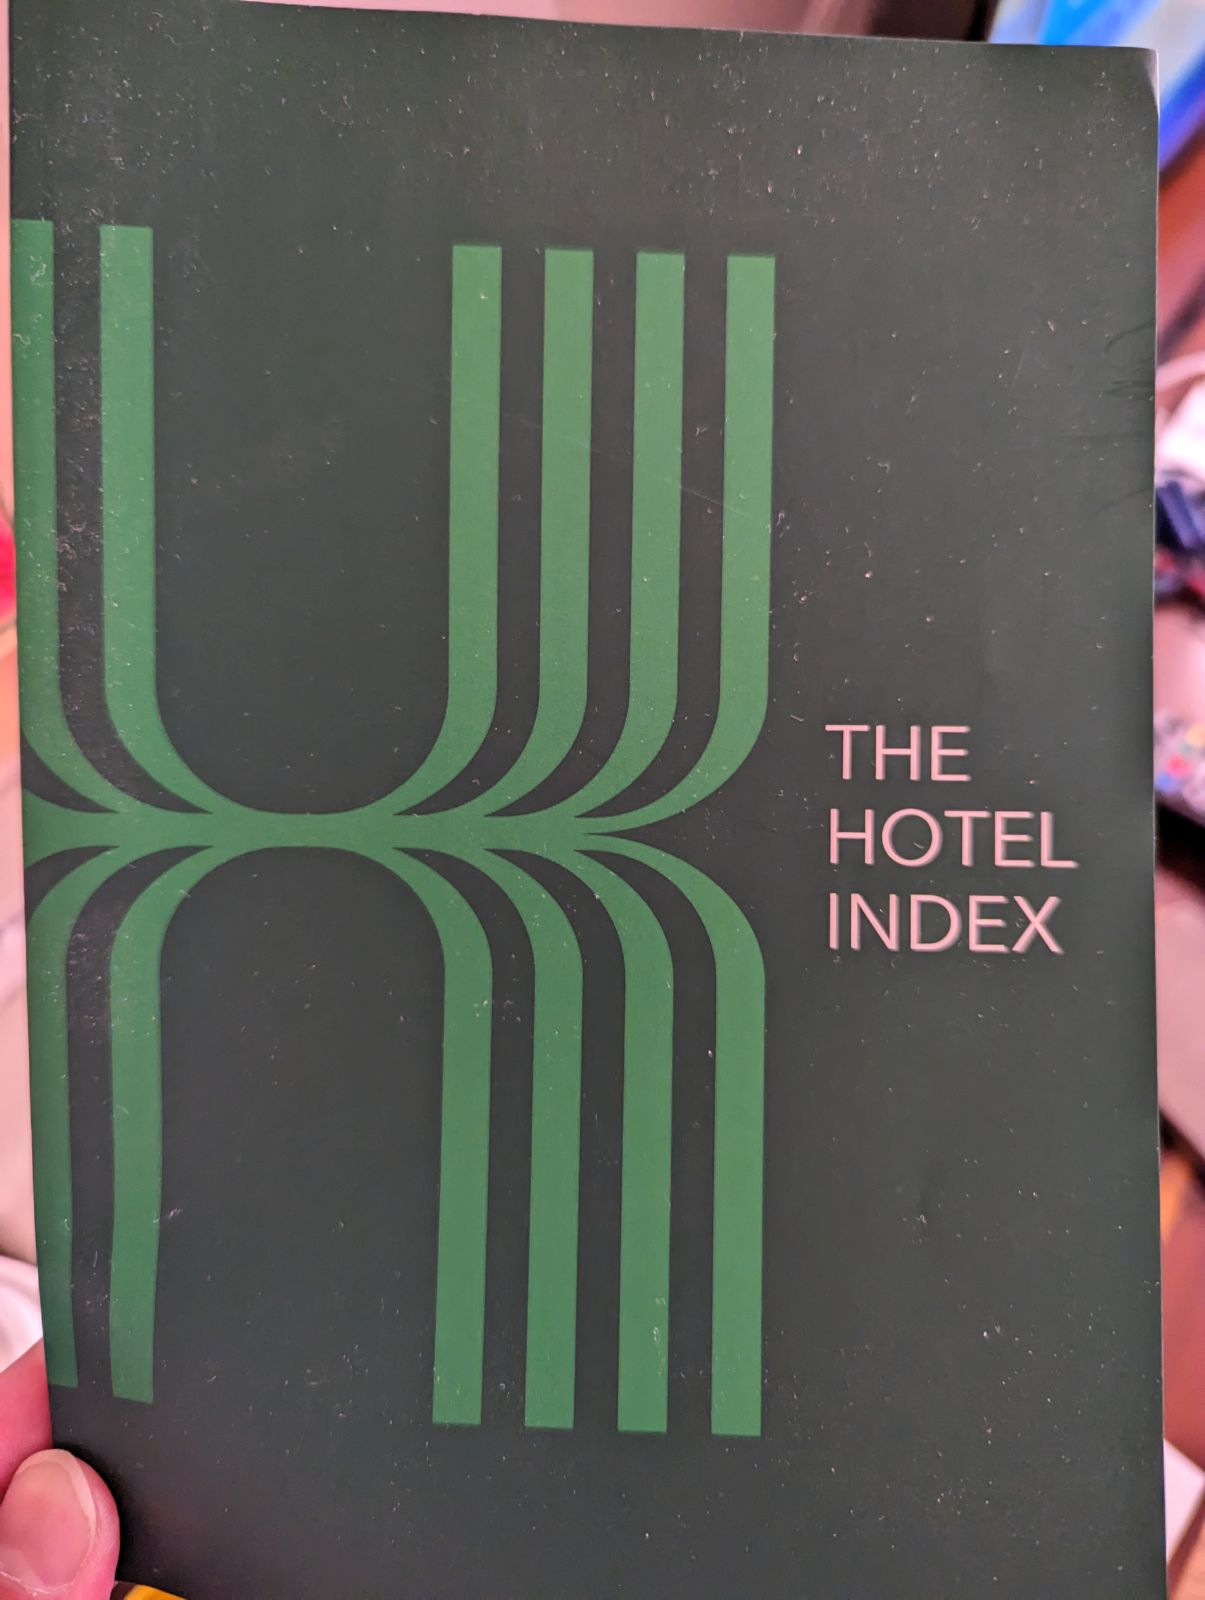 THE HOTEL INDEX